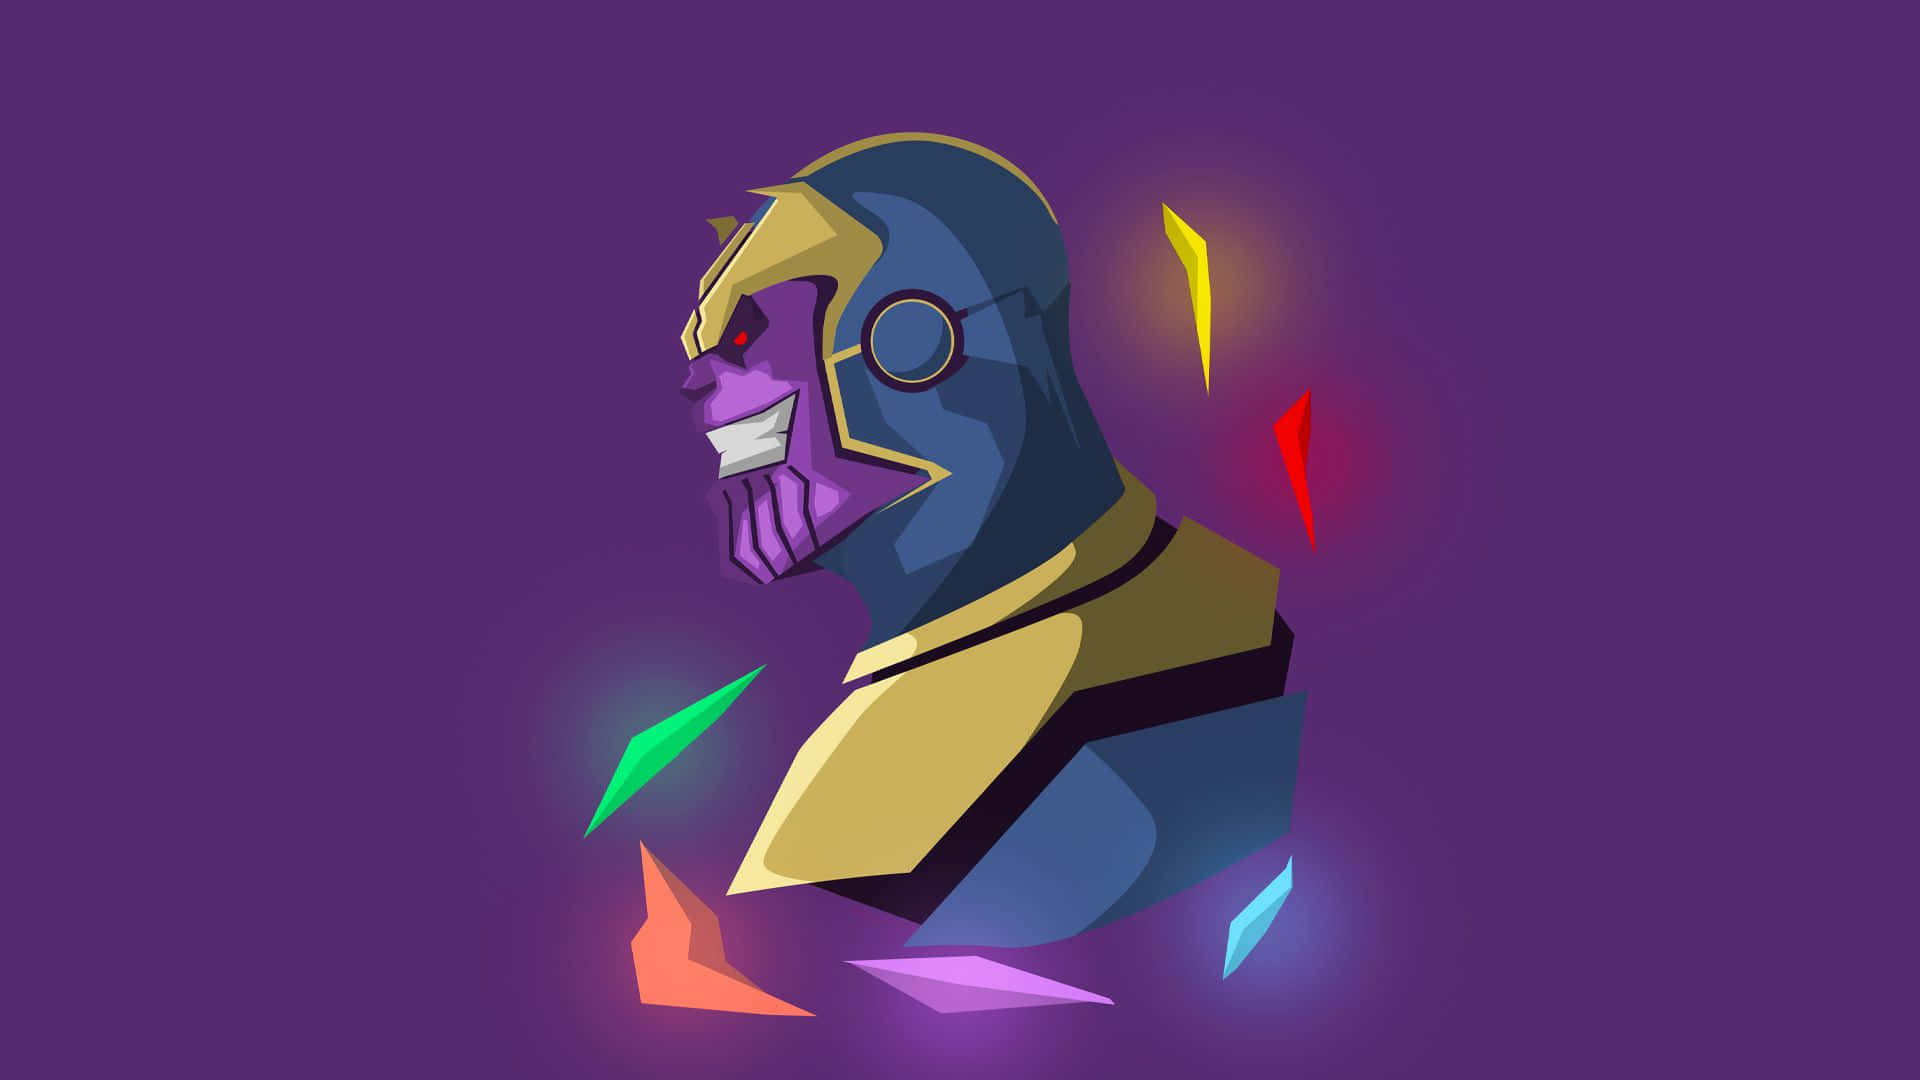 The Mad Titan - Thanos